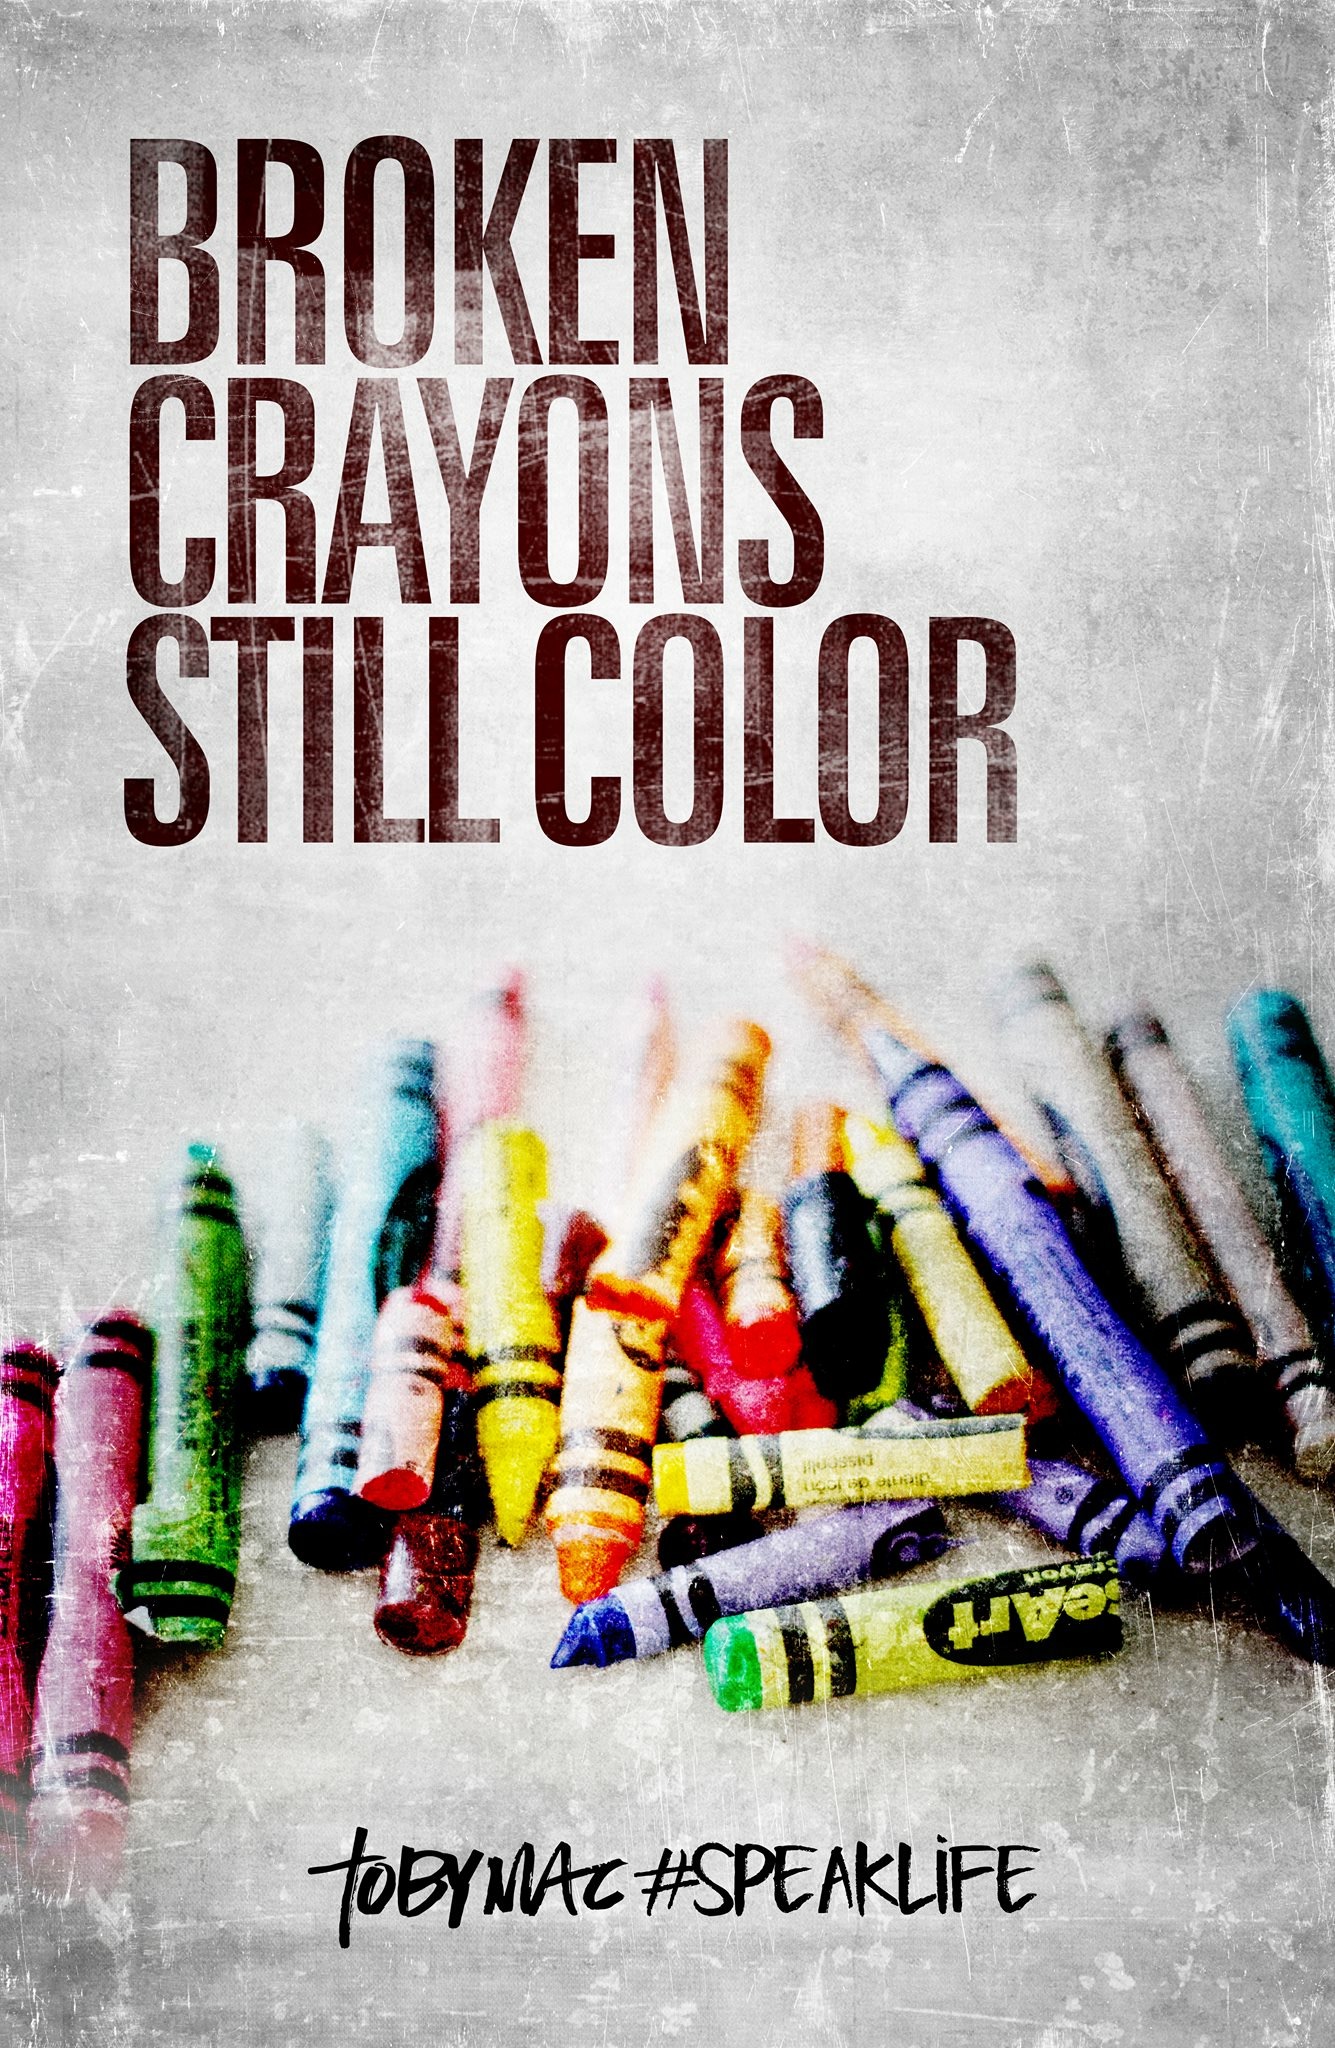 Broken Crayons Have a Purpose – Be REAL